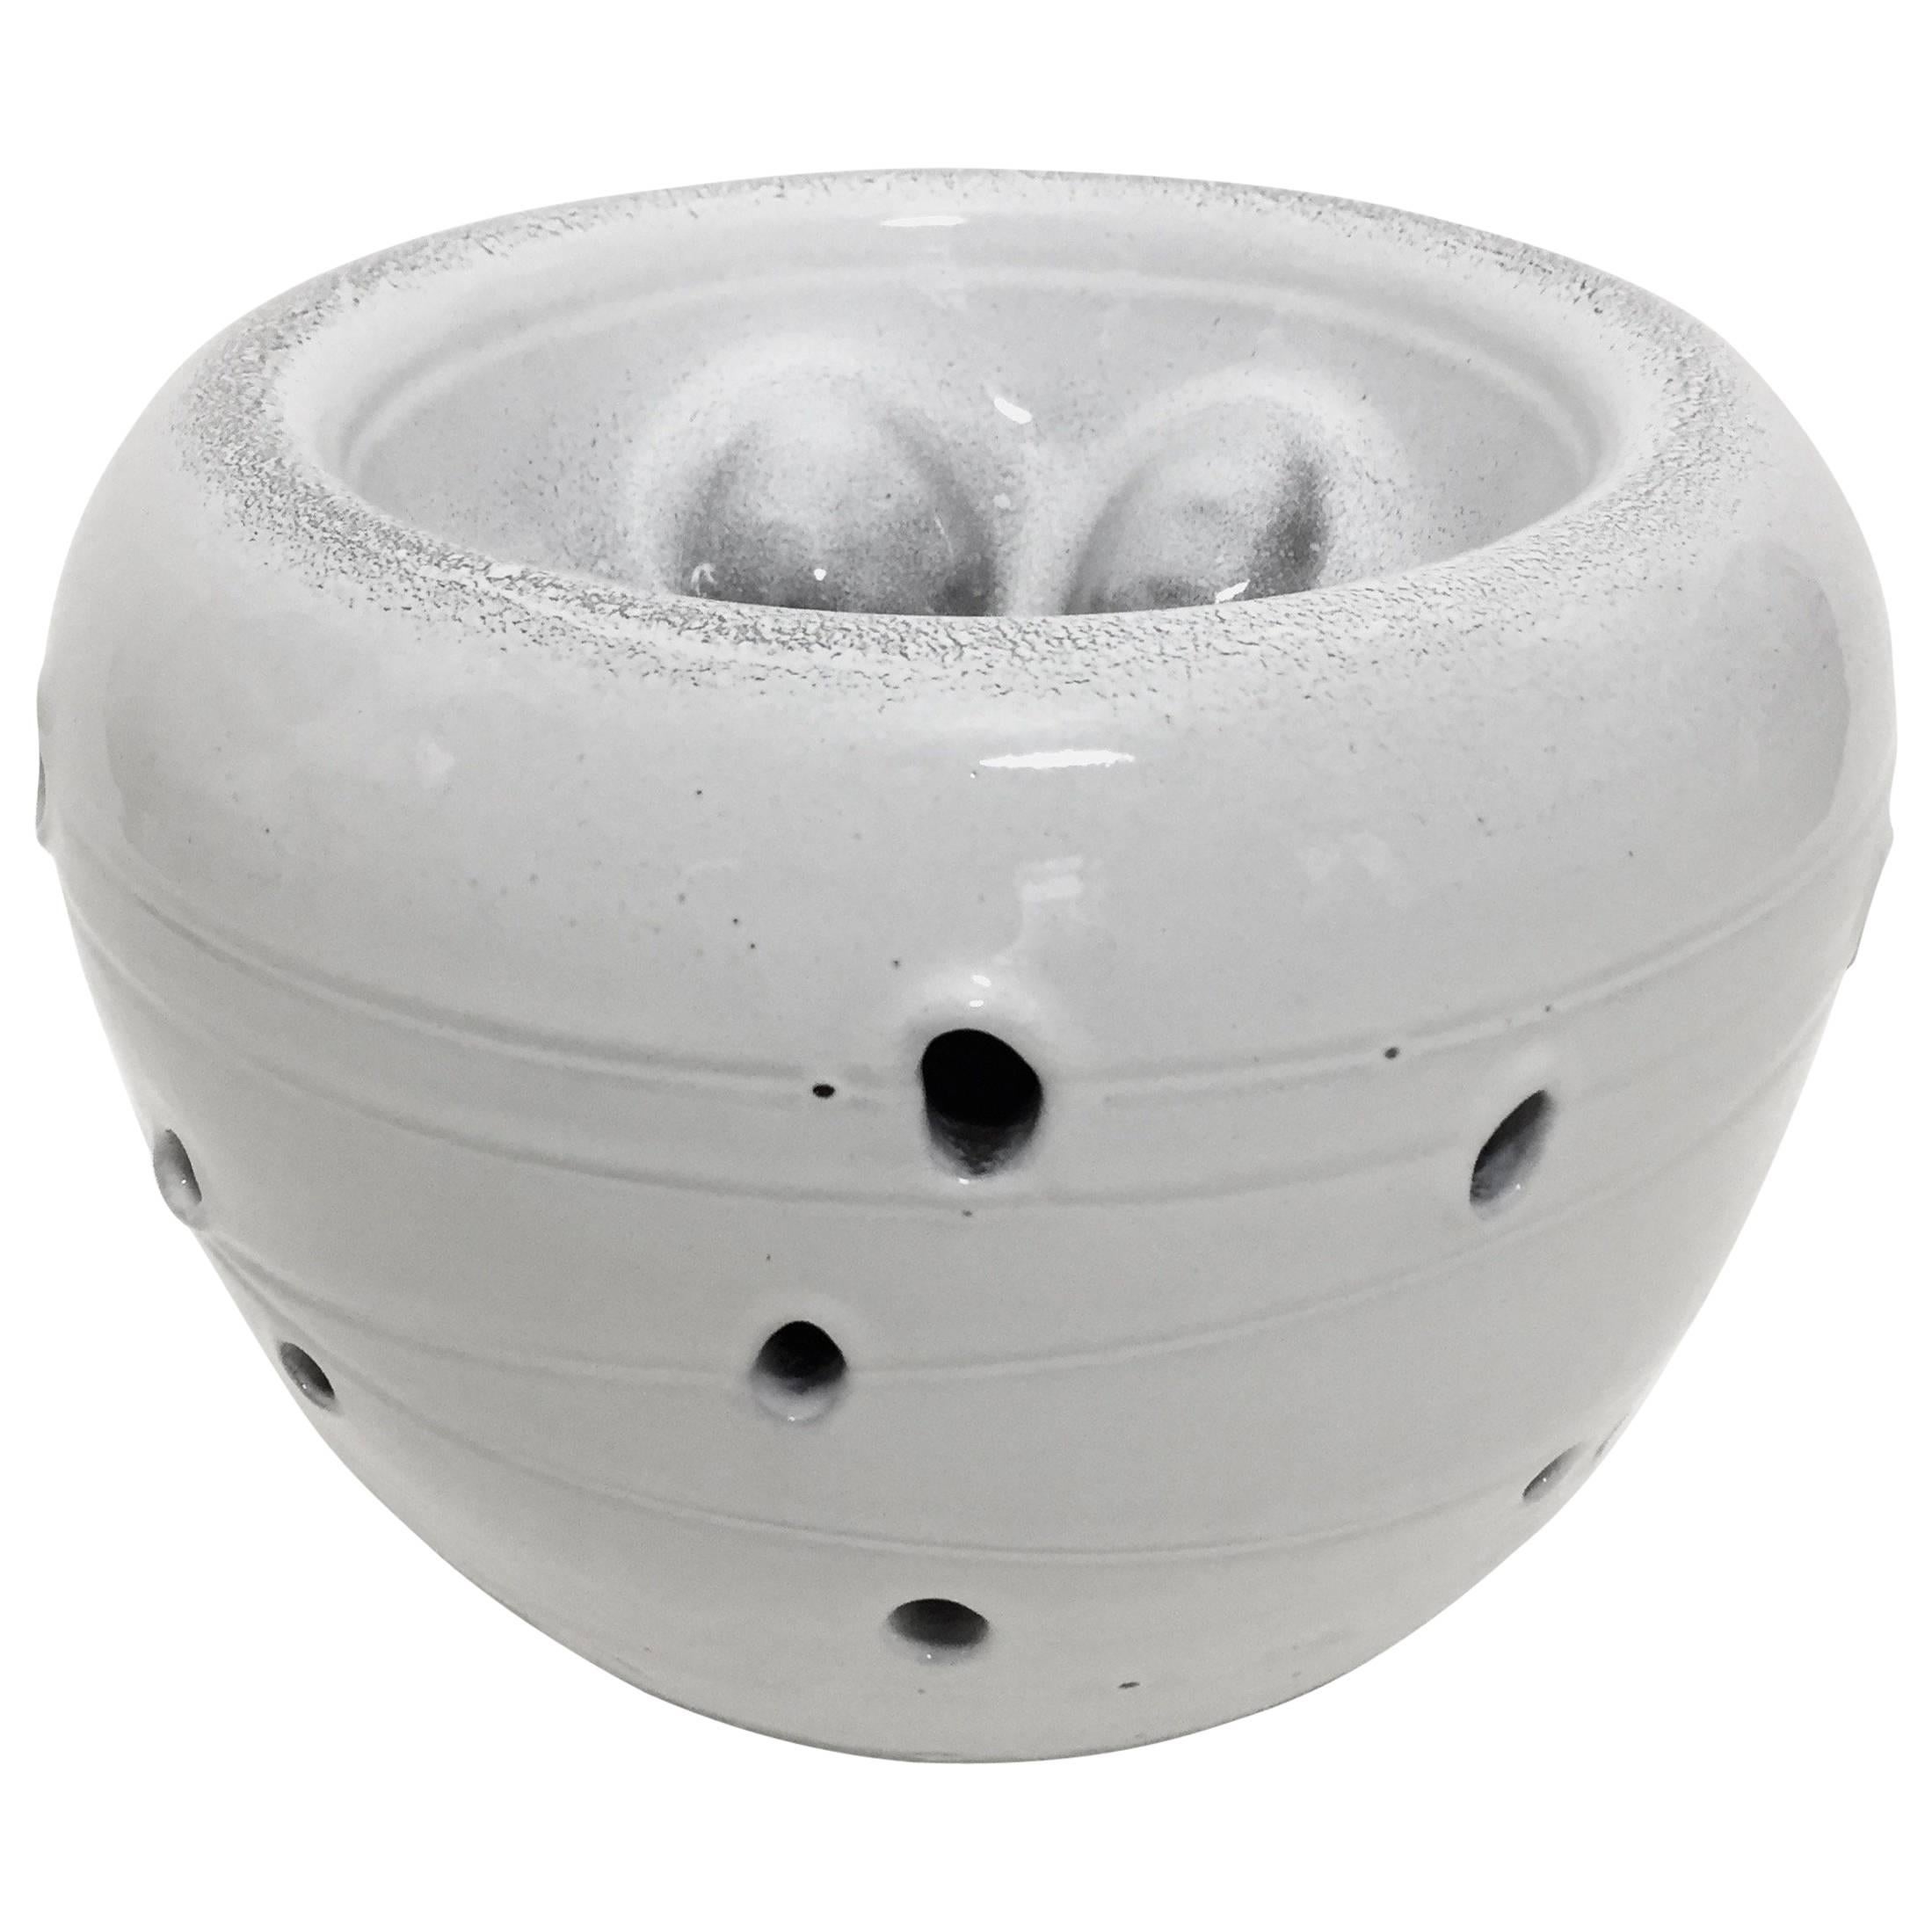 Ceramic Sculpture Forming a Large Decorative Bowl For Sale